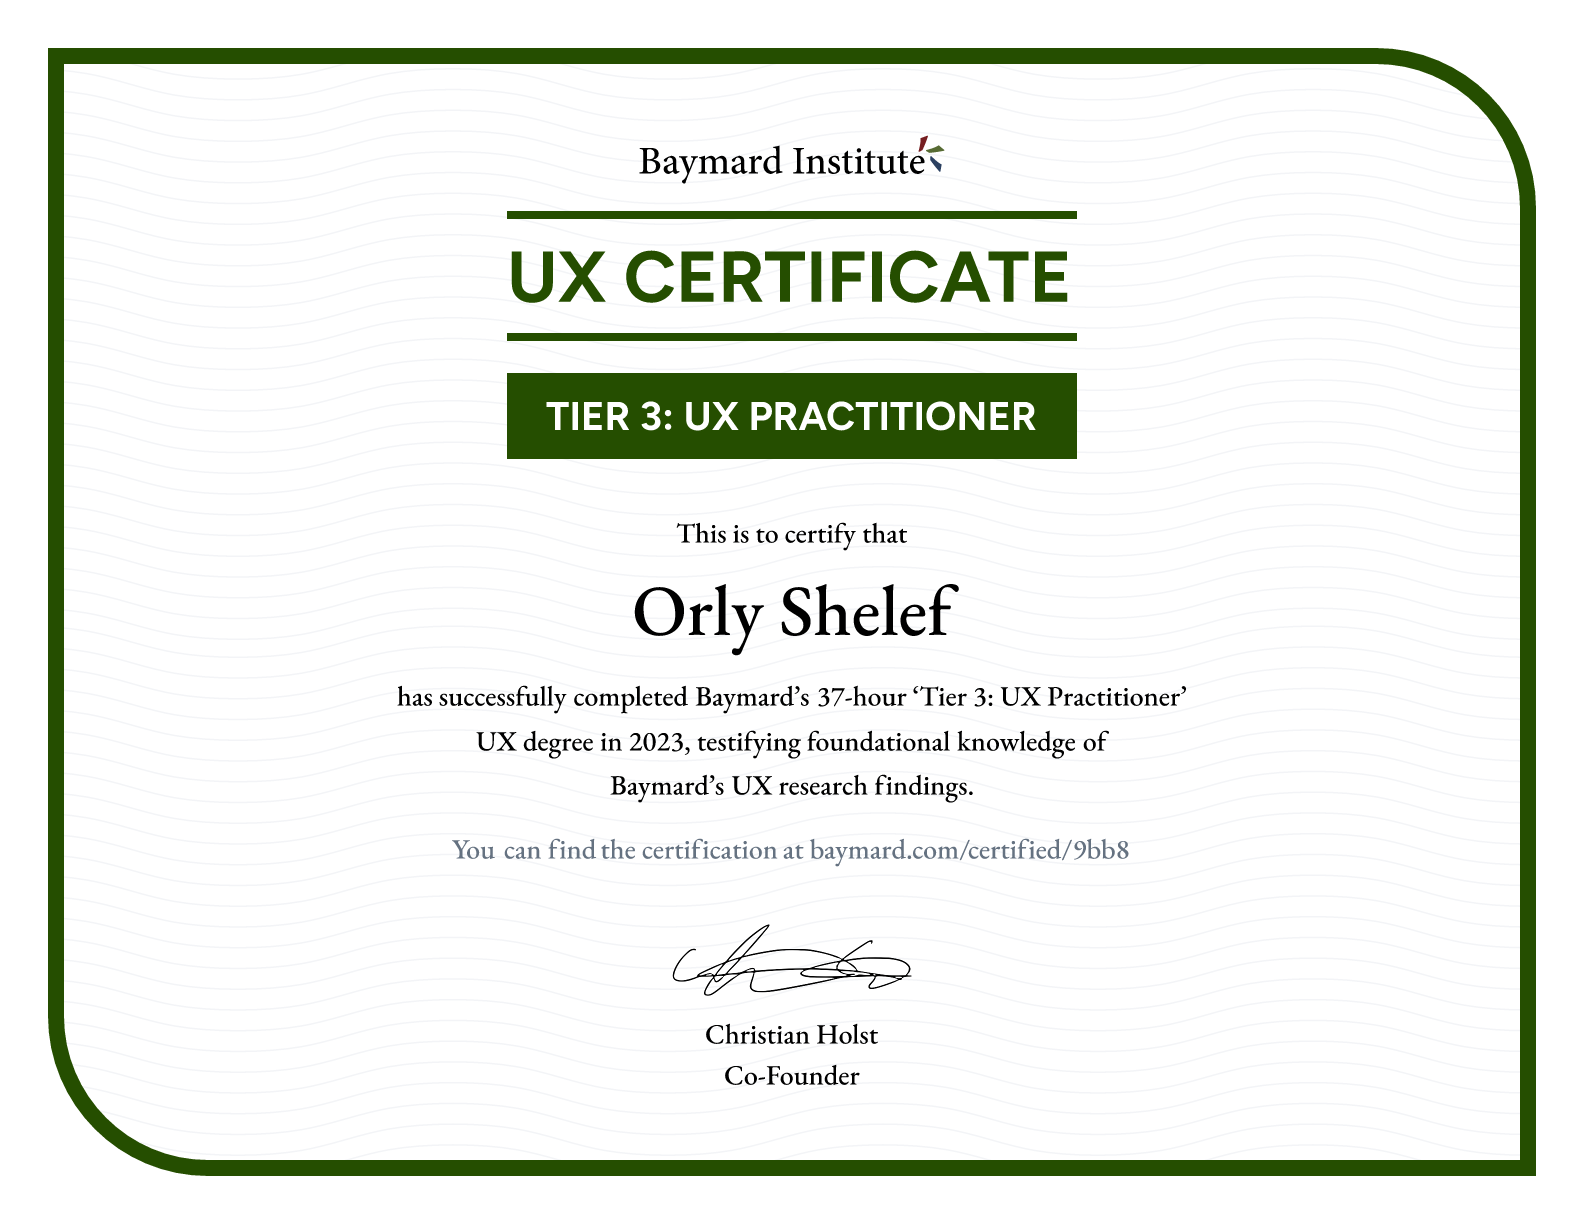 Orly Shelef’s certificate